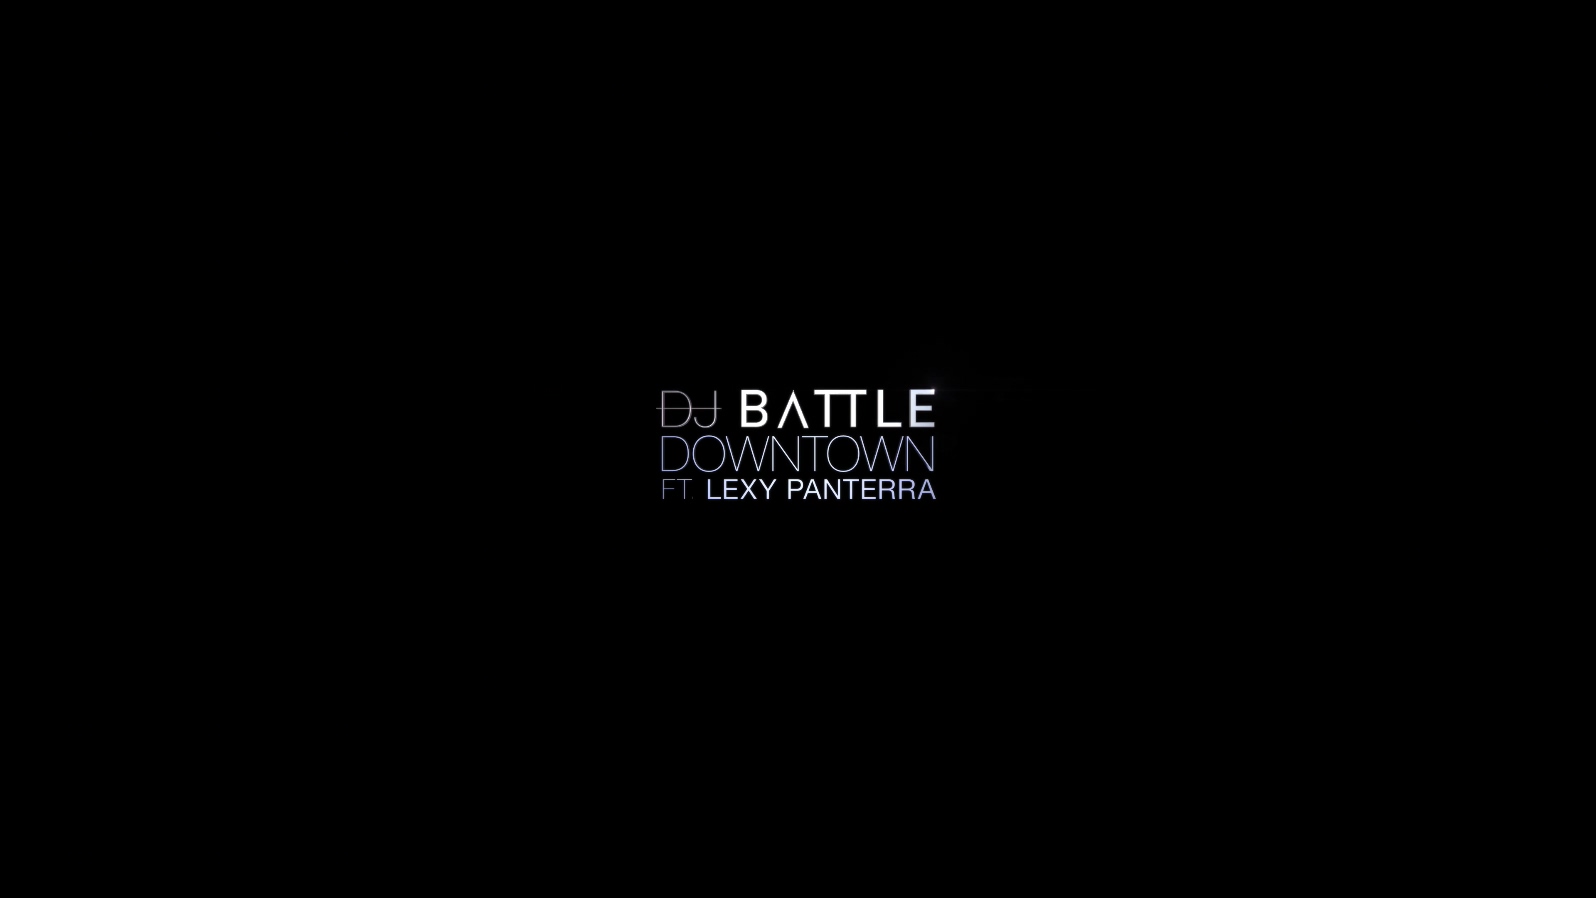 Dj Battle Ft. Lexy Panterra - DownTown - 4K - 2160P